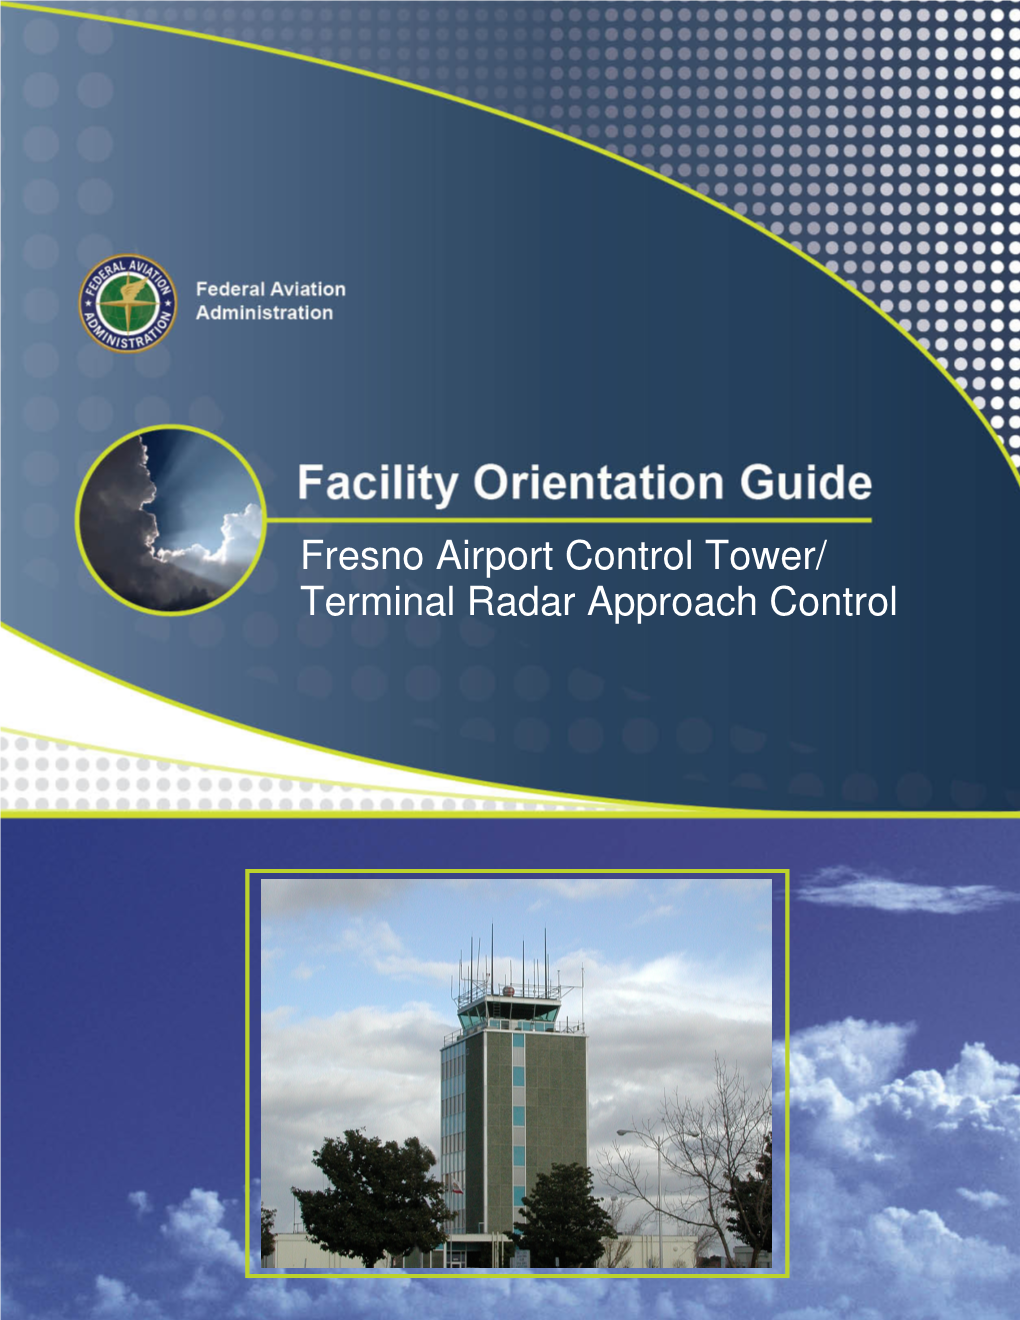 Fresno Airport Control Tower/ Terminal Radar Approach Control